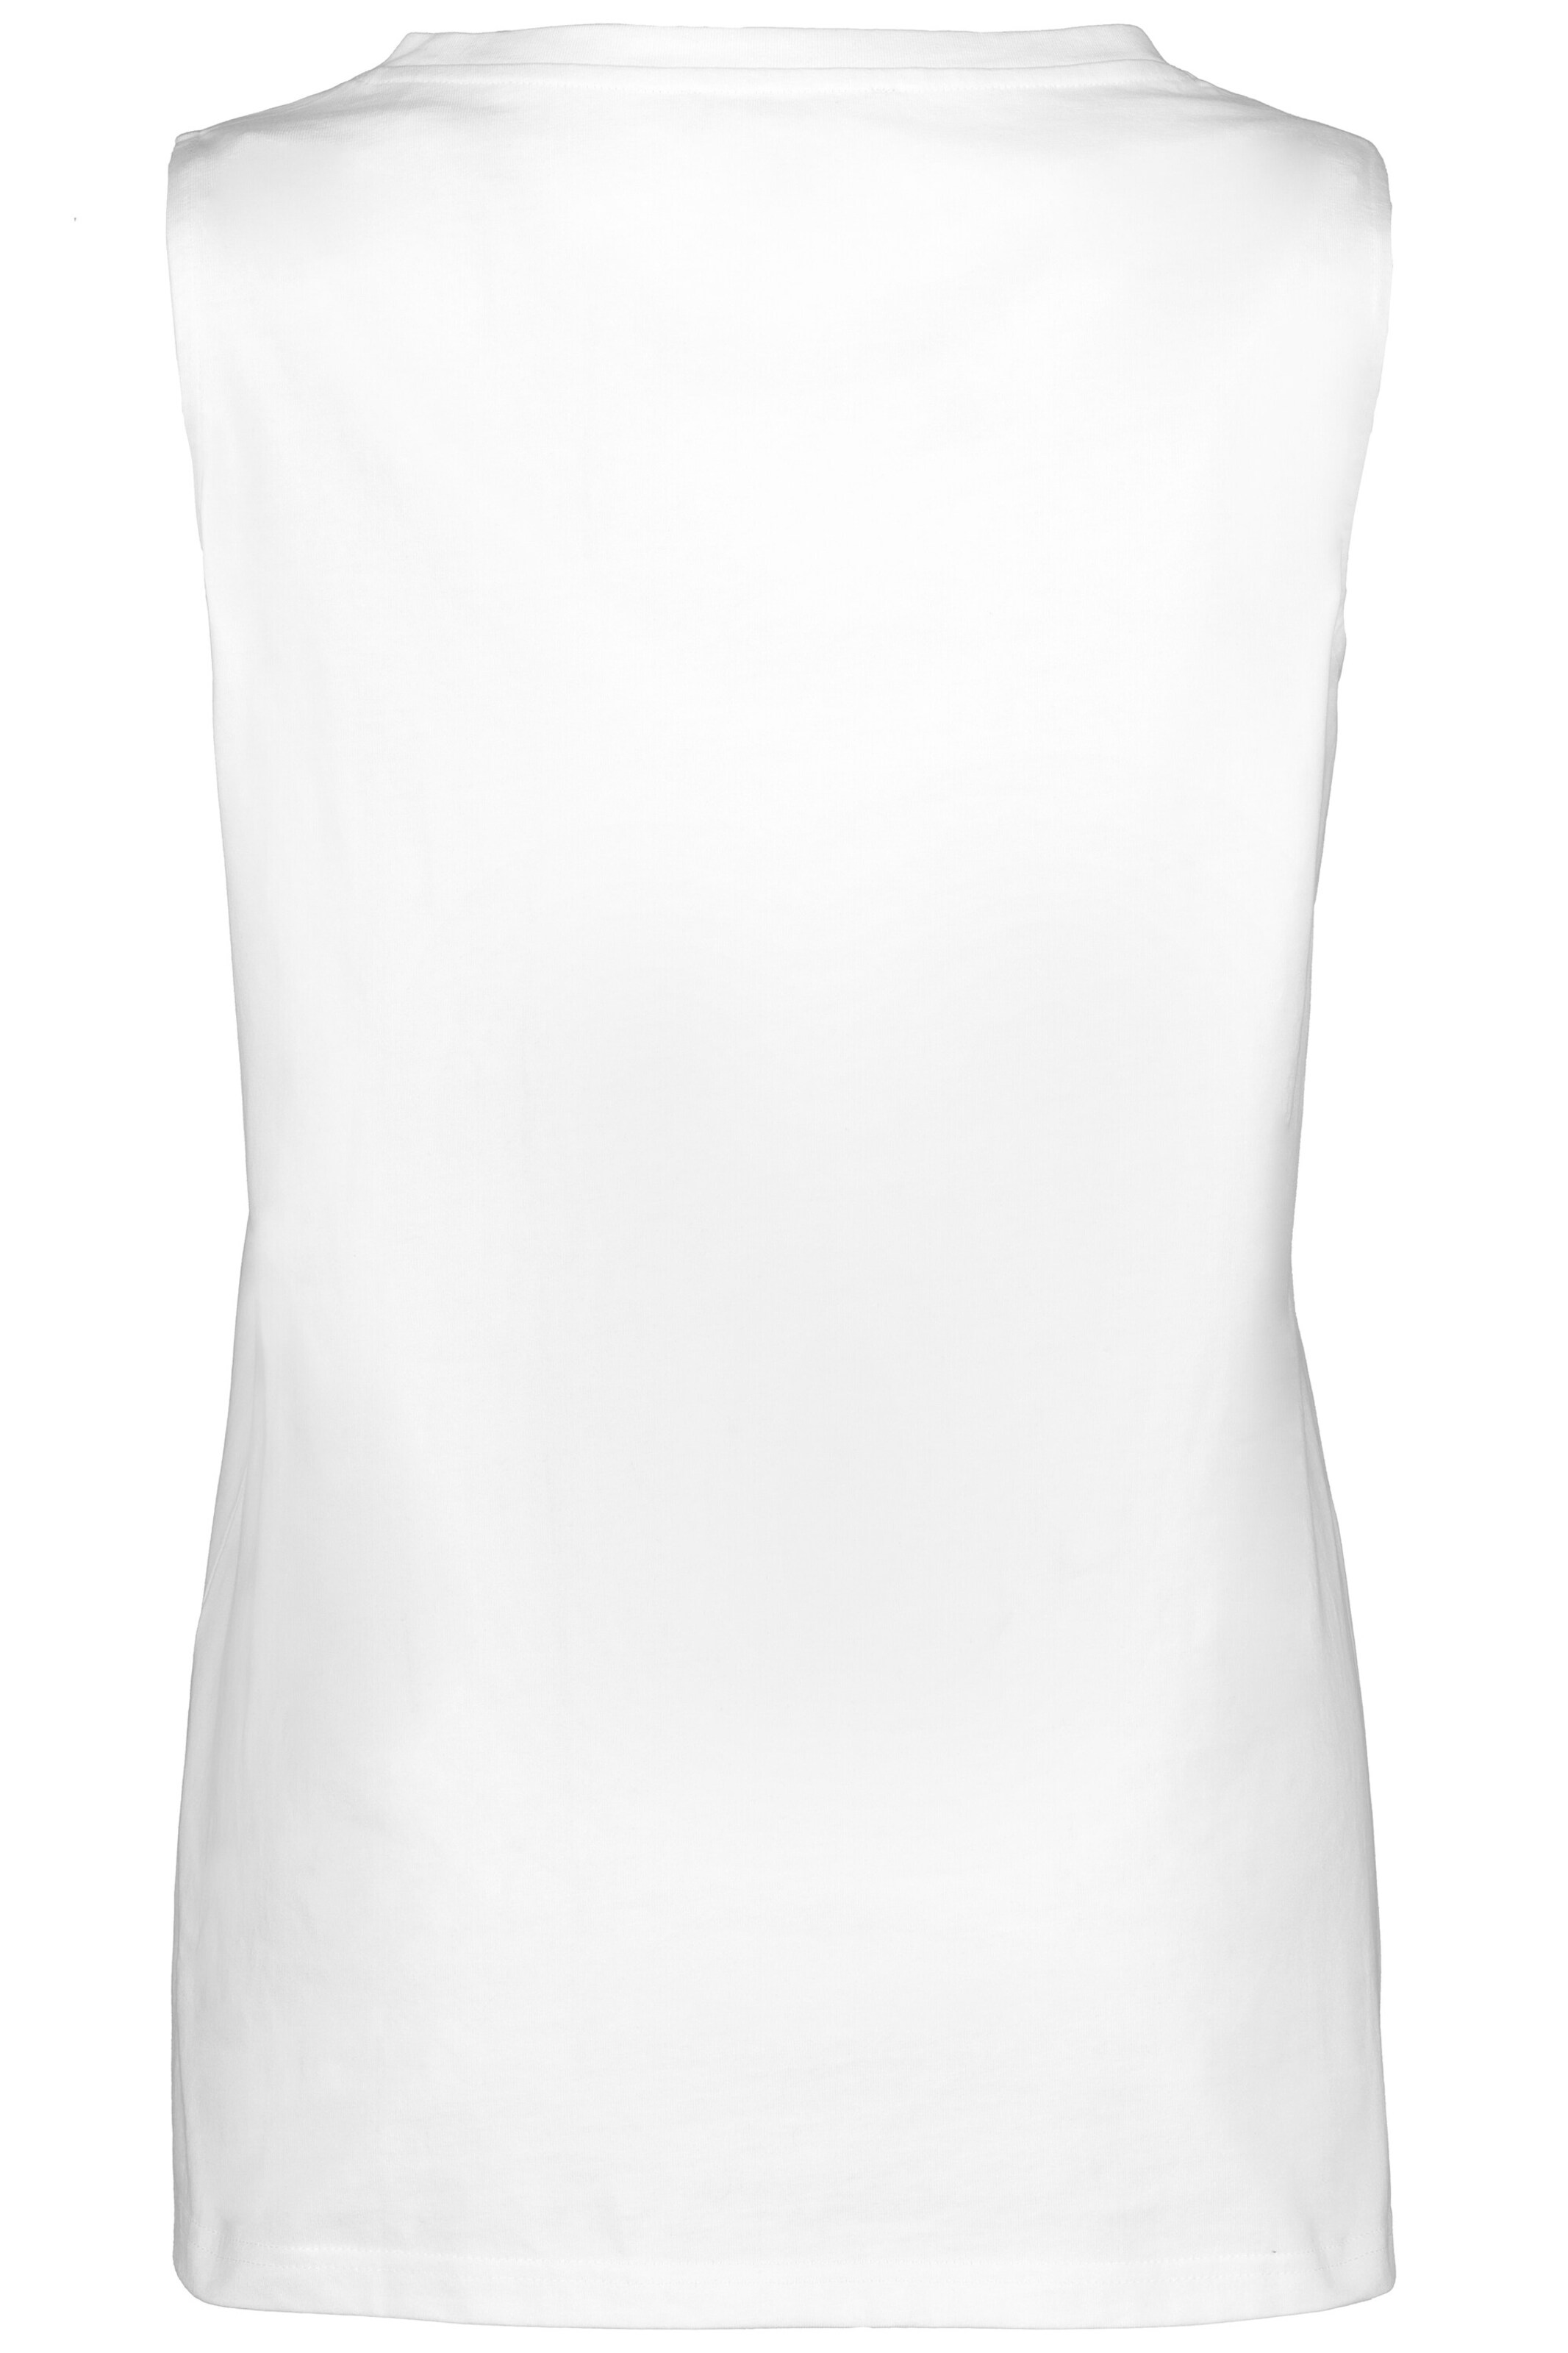 Ulla Popken Shirt in Weiß 